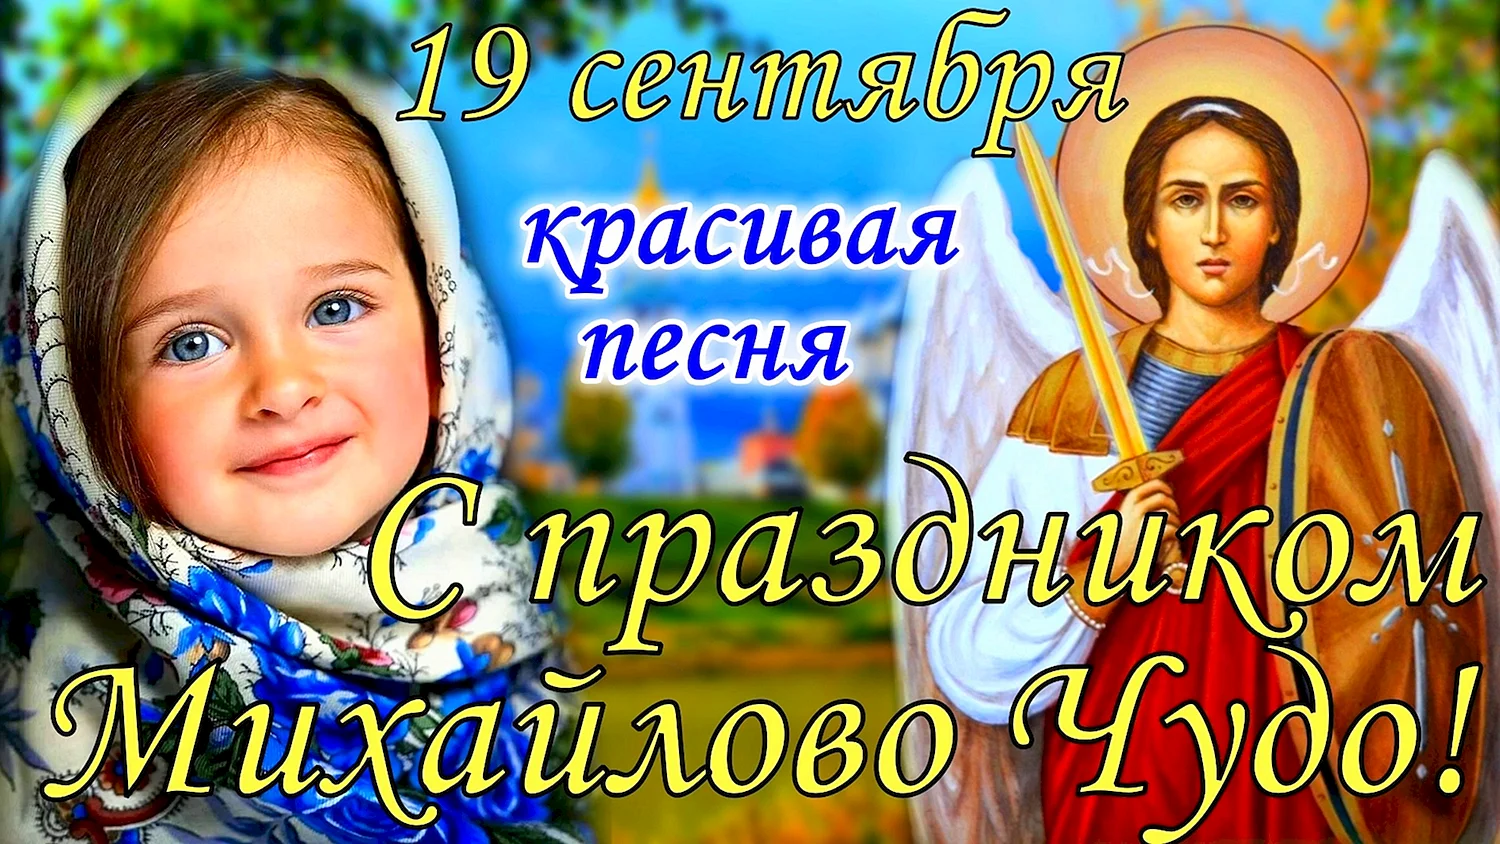 Михайлово чудо праздник открытки